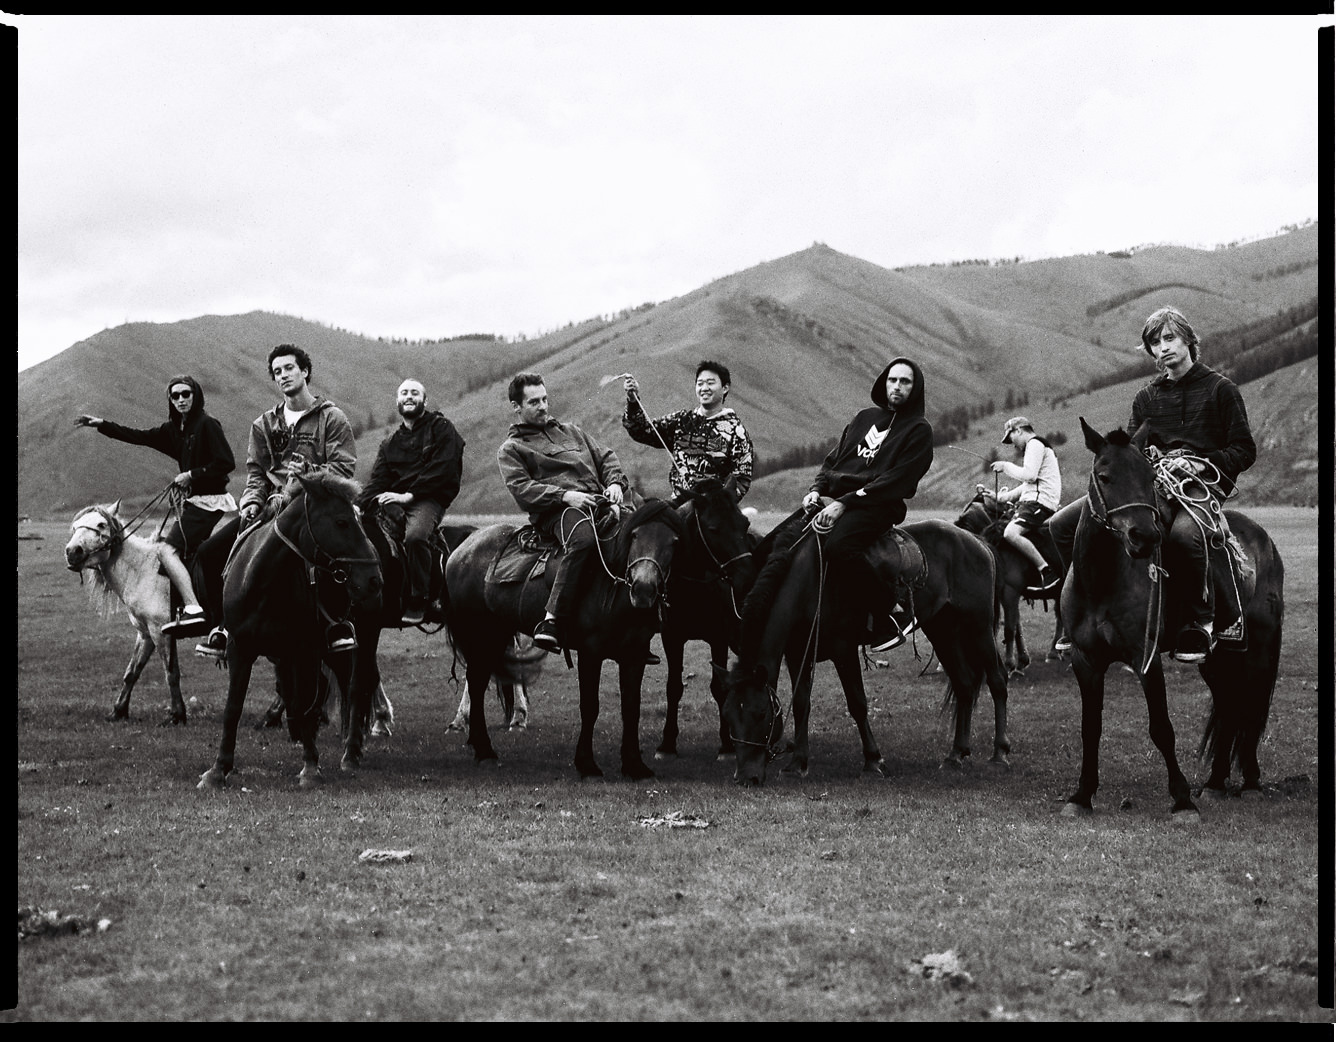 MediumFormatPatrikWallner_Mongolia_Horses